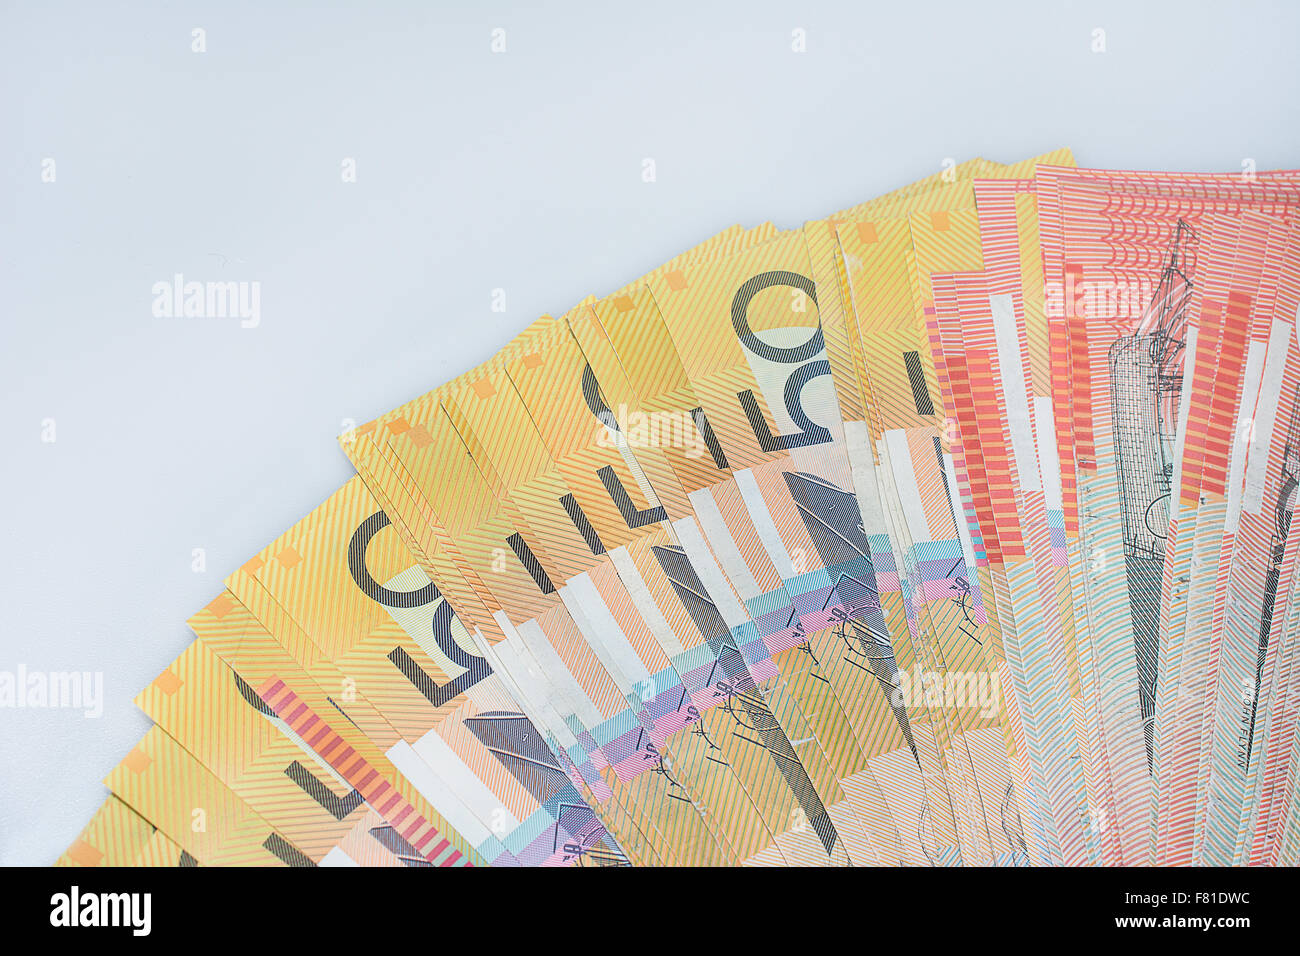 Fifty Dollar Australian Banknotes Stock Photo